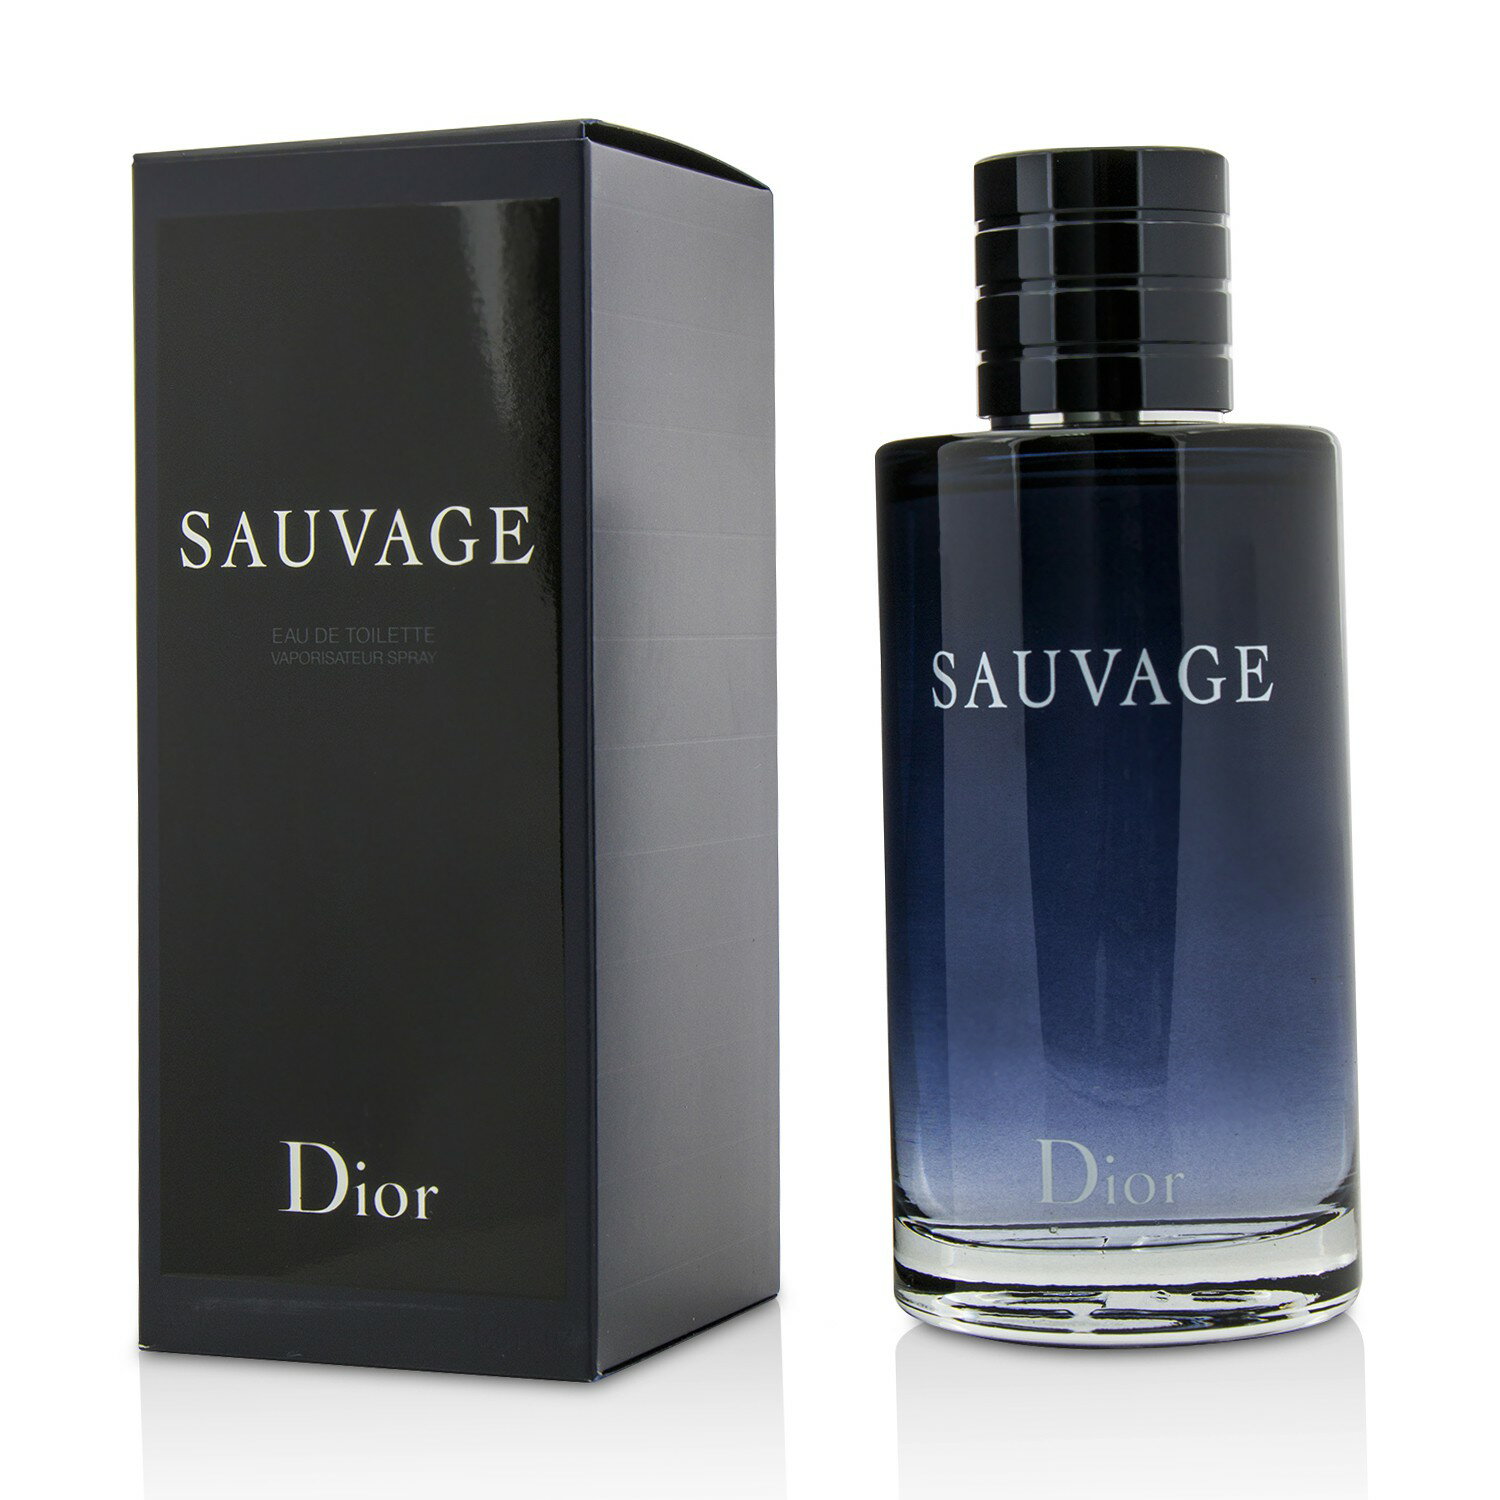 迪奧Christian Dior - Sauvage 曠野之心淡香水| 草莓網Strawberrynet直